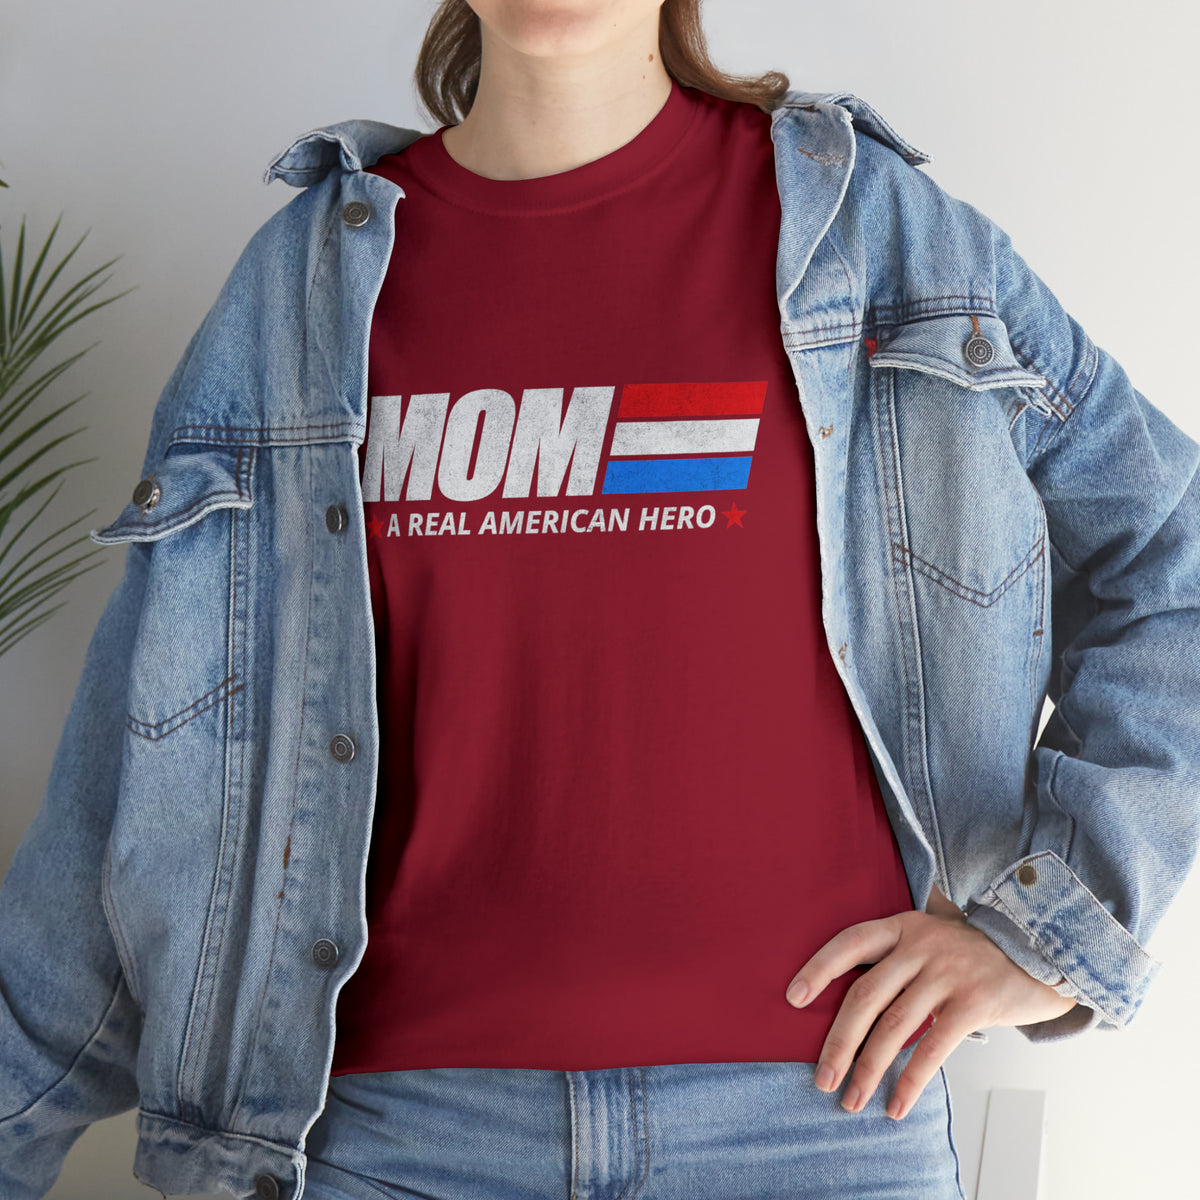 Mom - A Real American Hero T-Shirt